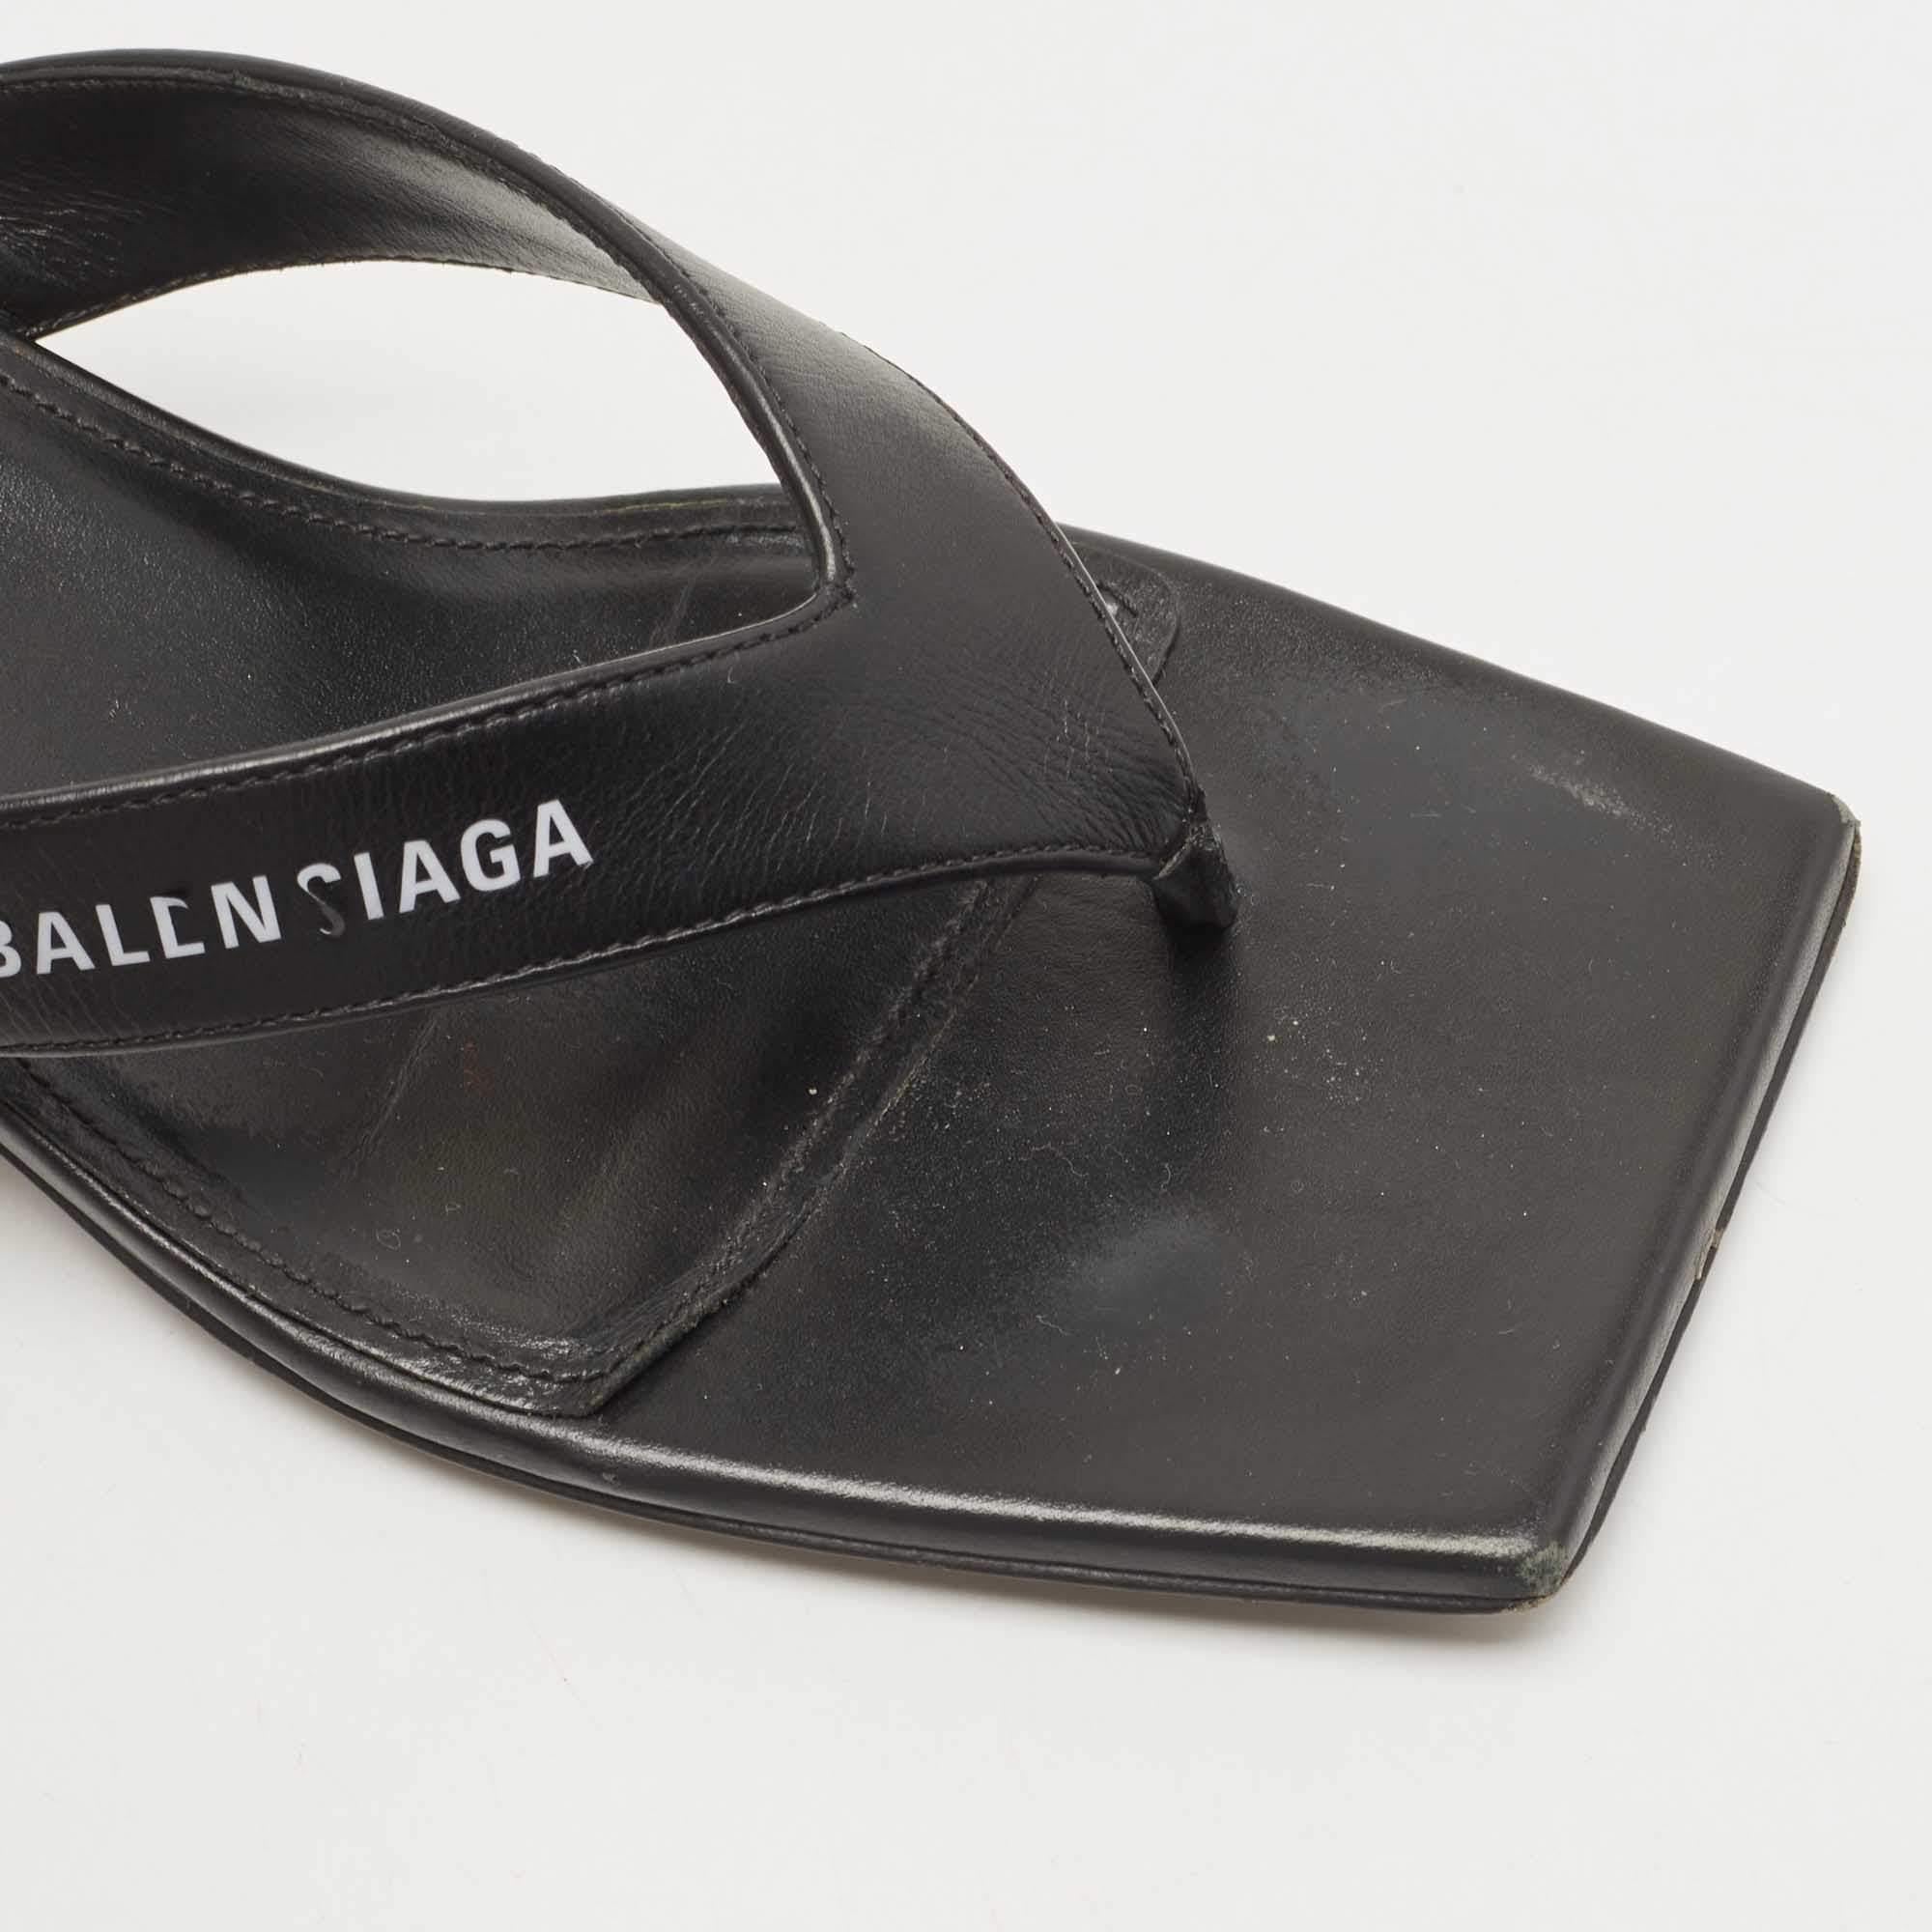 Balenciaga Black Leather Square Toe Thong Slide Sandals Size 37 2